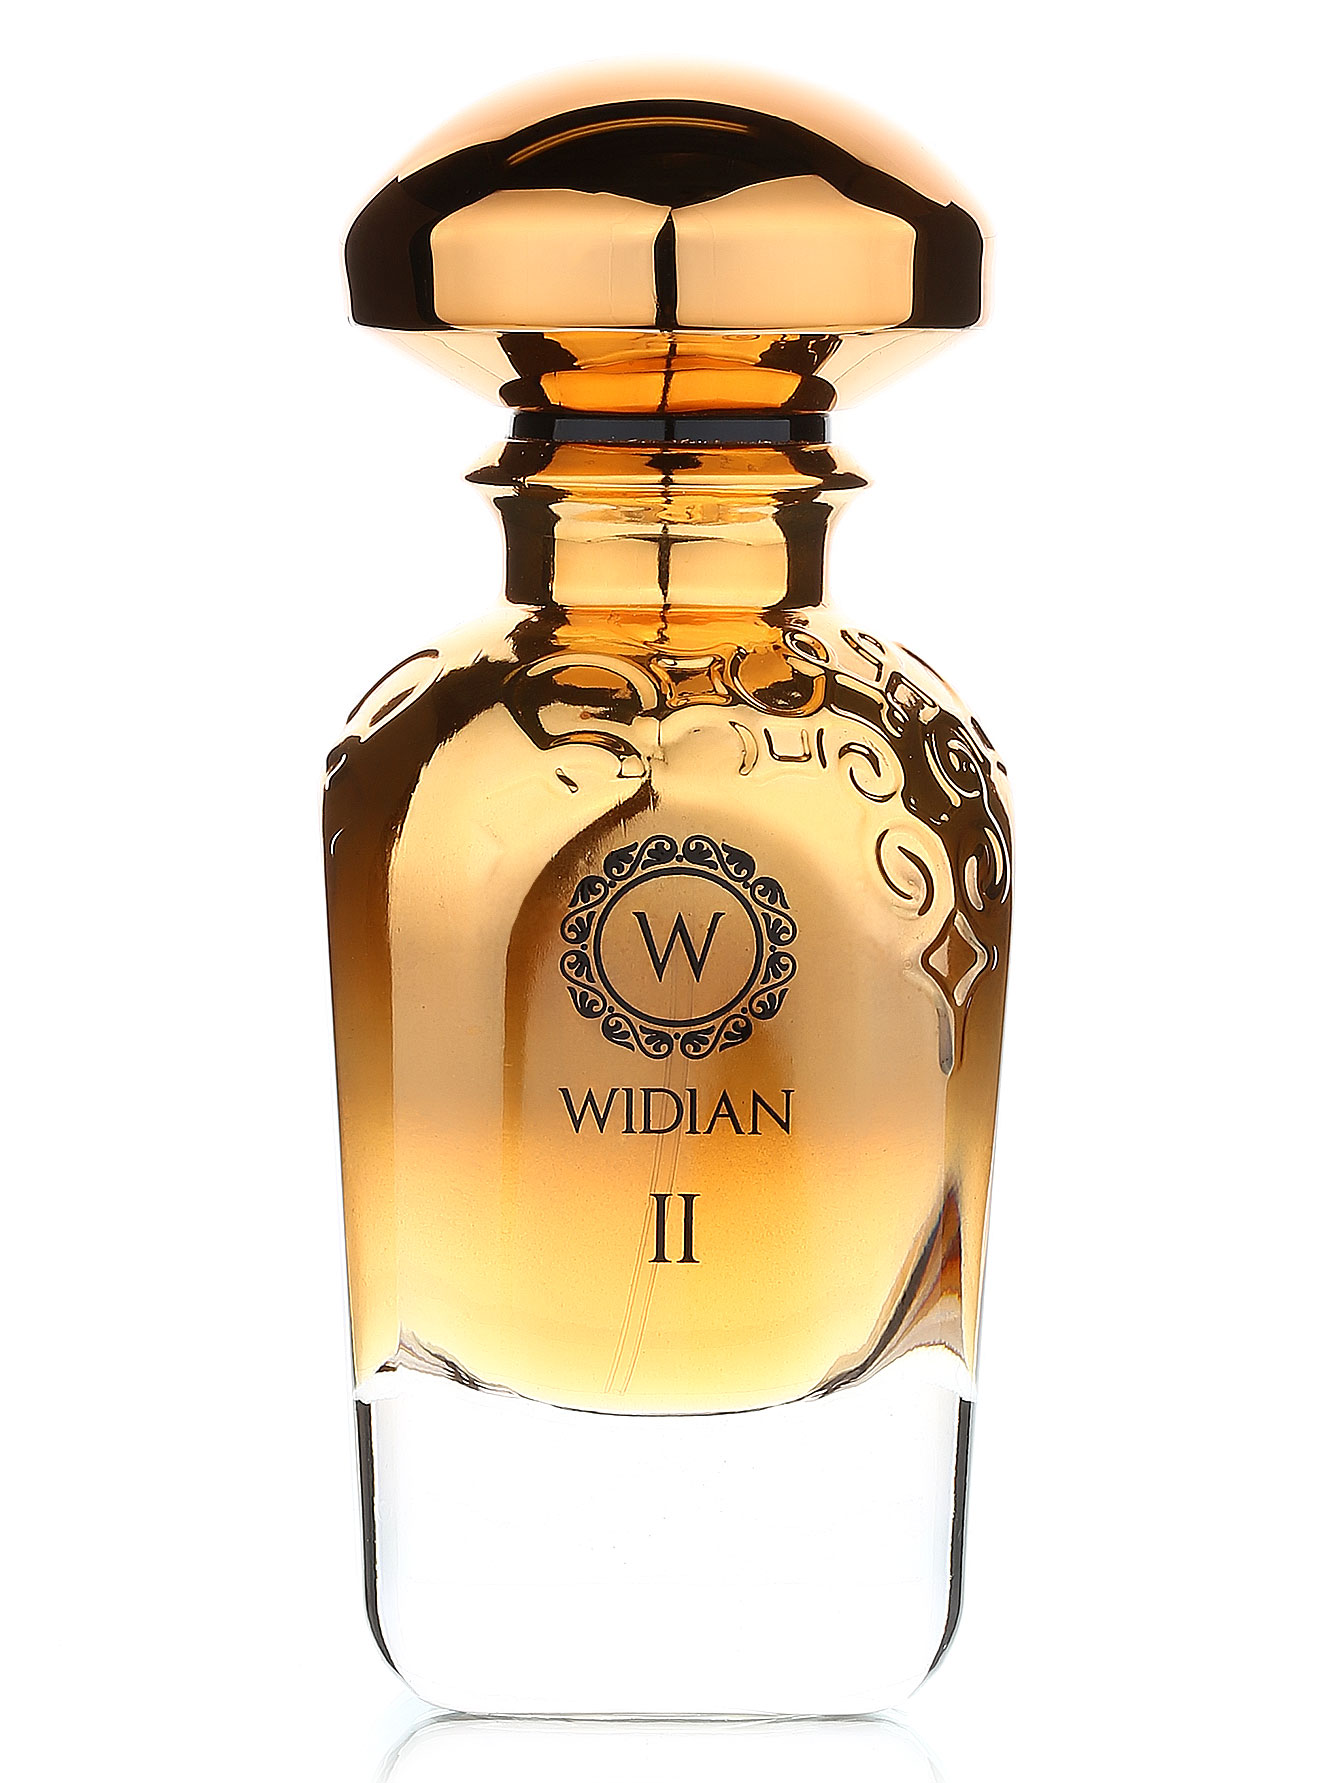 Arabia 2. Духи Widian AJ Arabia 2. AJ Arabia Widian Black 2 Parfum. Widian Gold 2. AJ Arabia Widian Gold collection II Parfum.